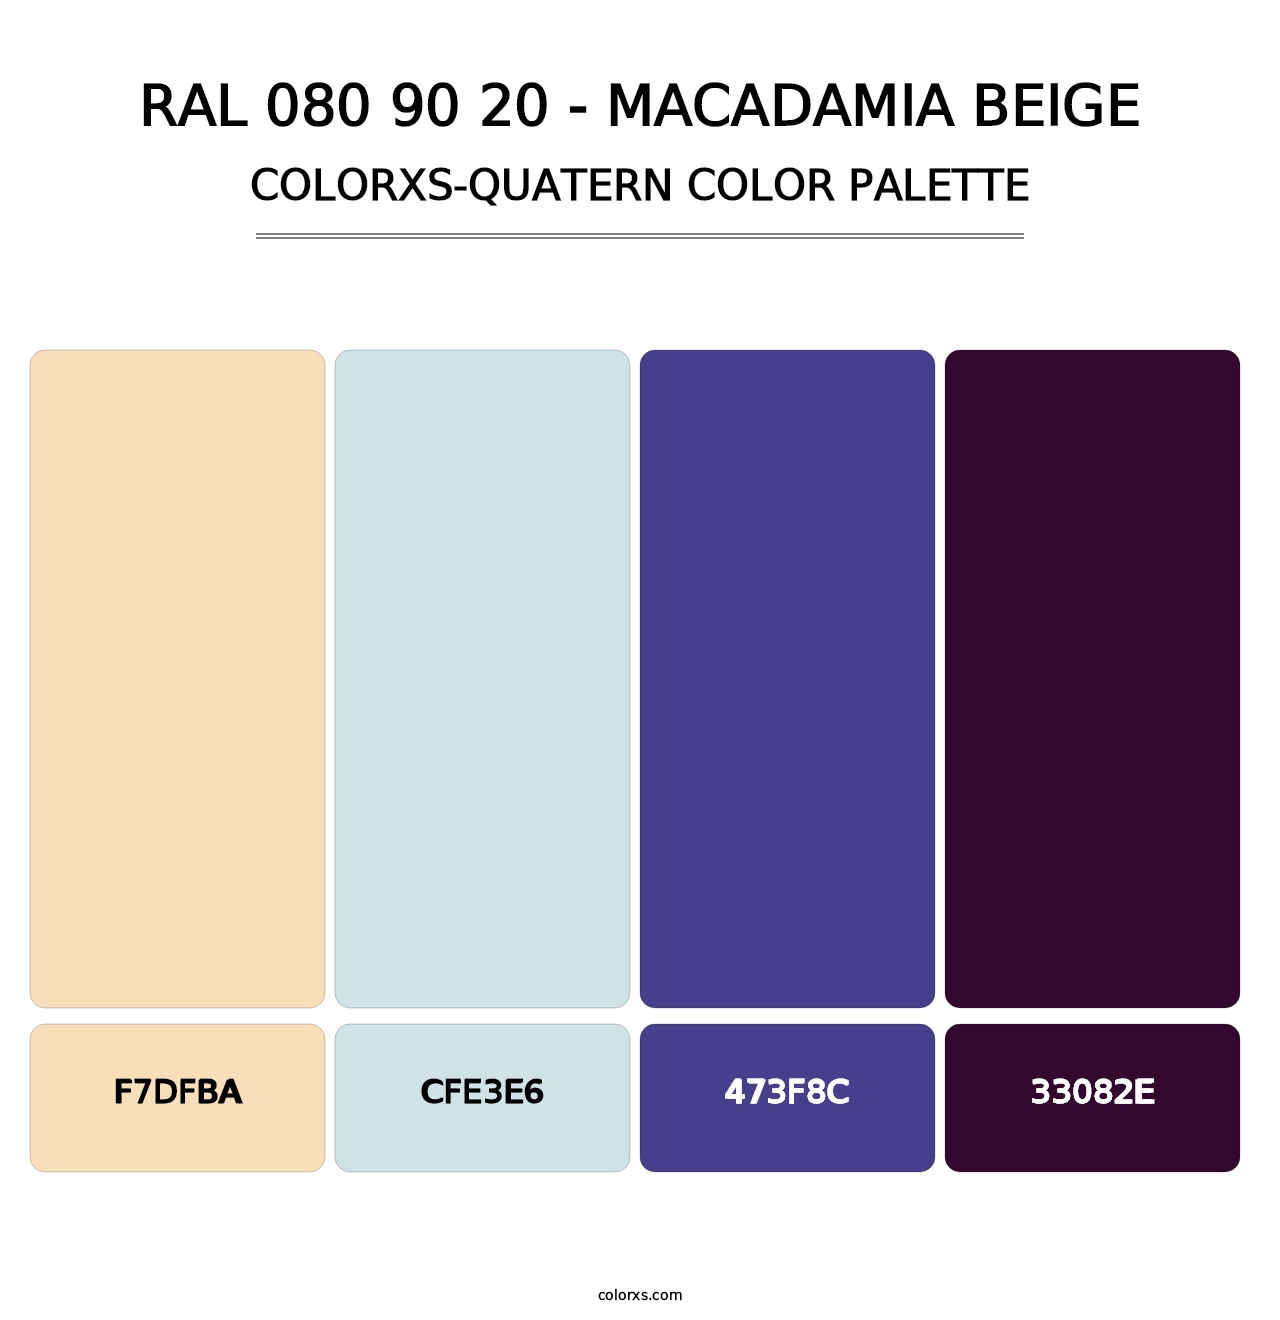 RAL 080 90 20 - Macadamia Beige - Colorxs Quatern Palette